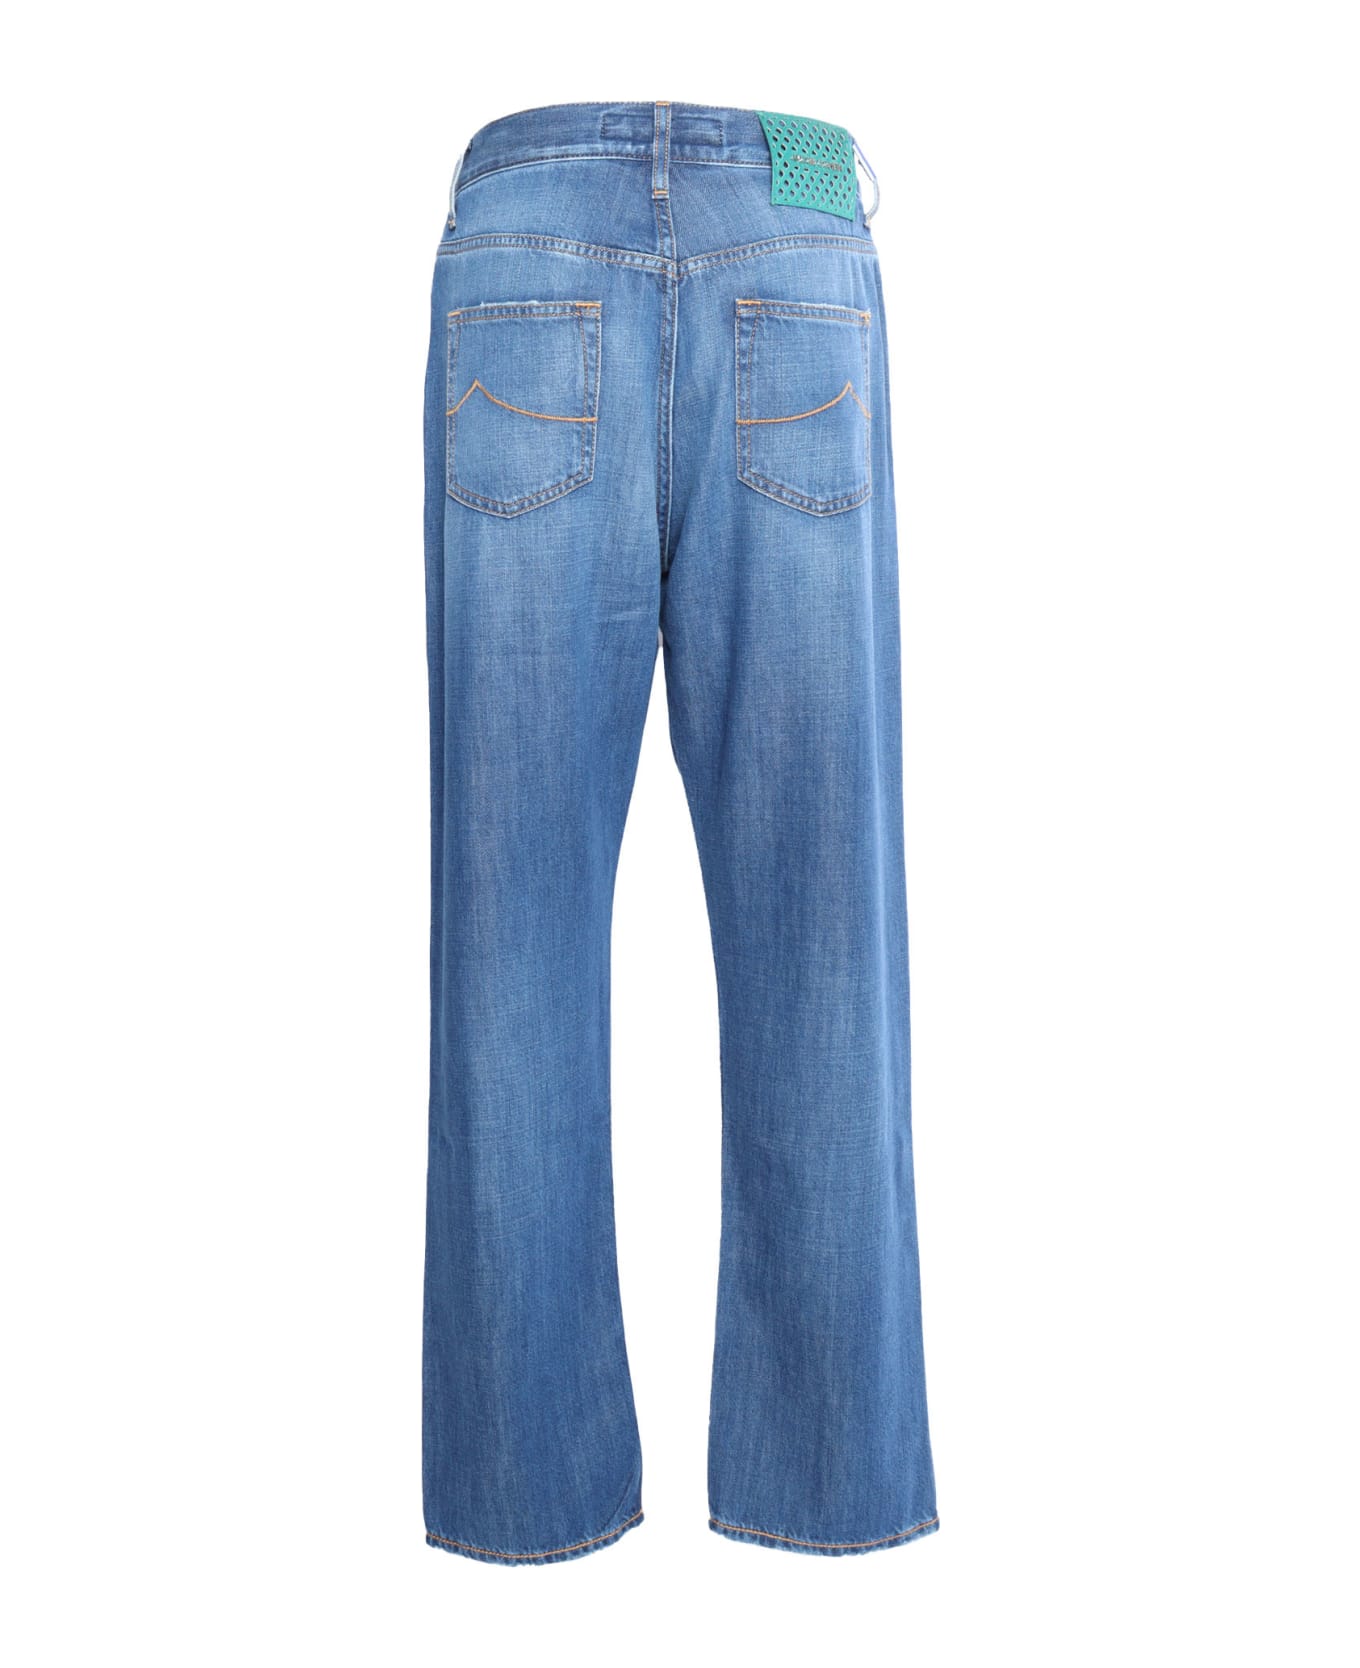 Jacob Cohen Blue 5 Pocket Jeans - BLUE デニム